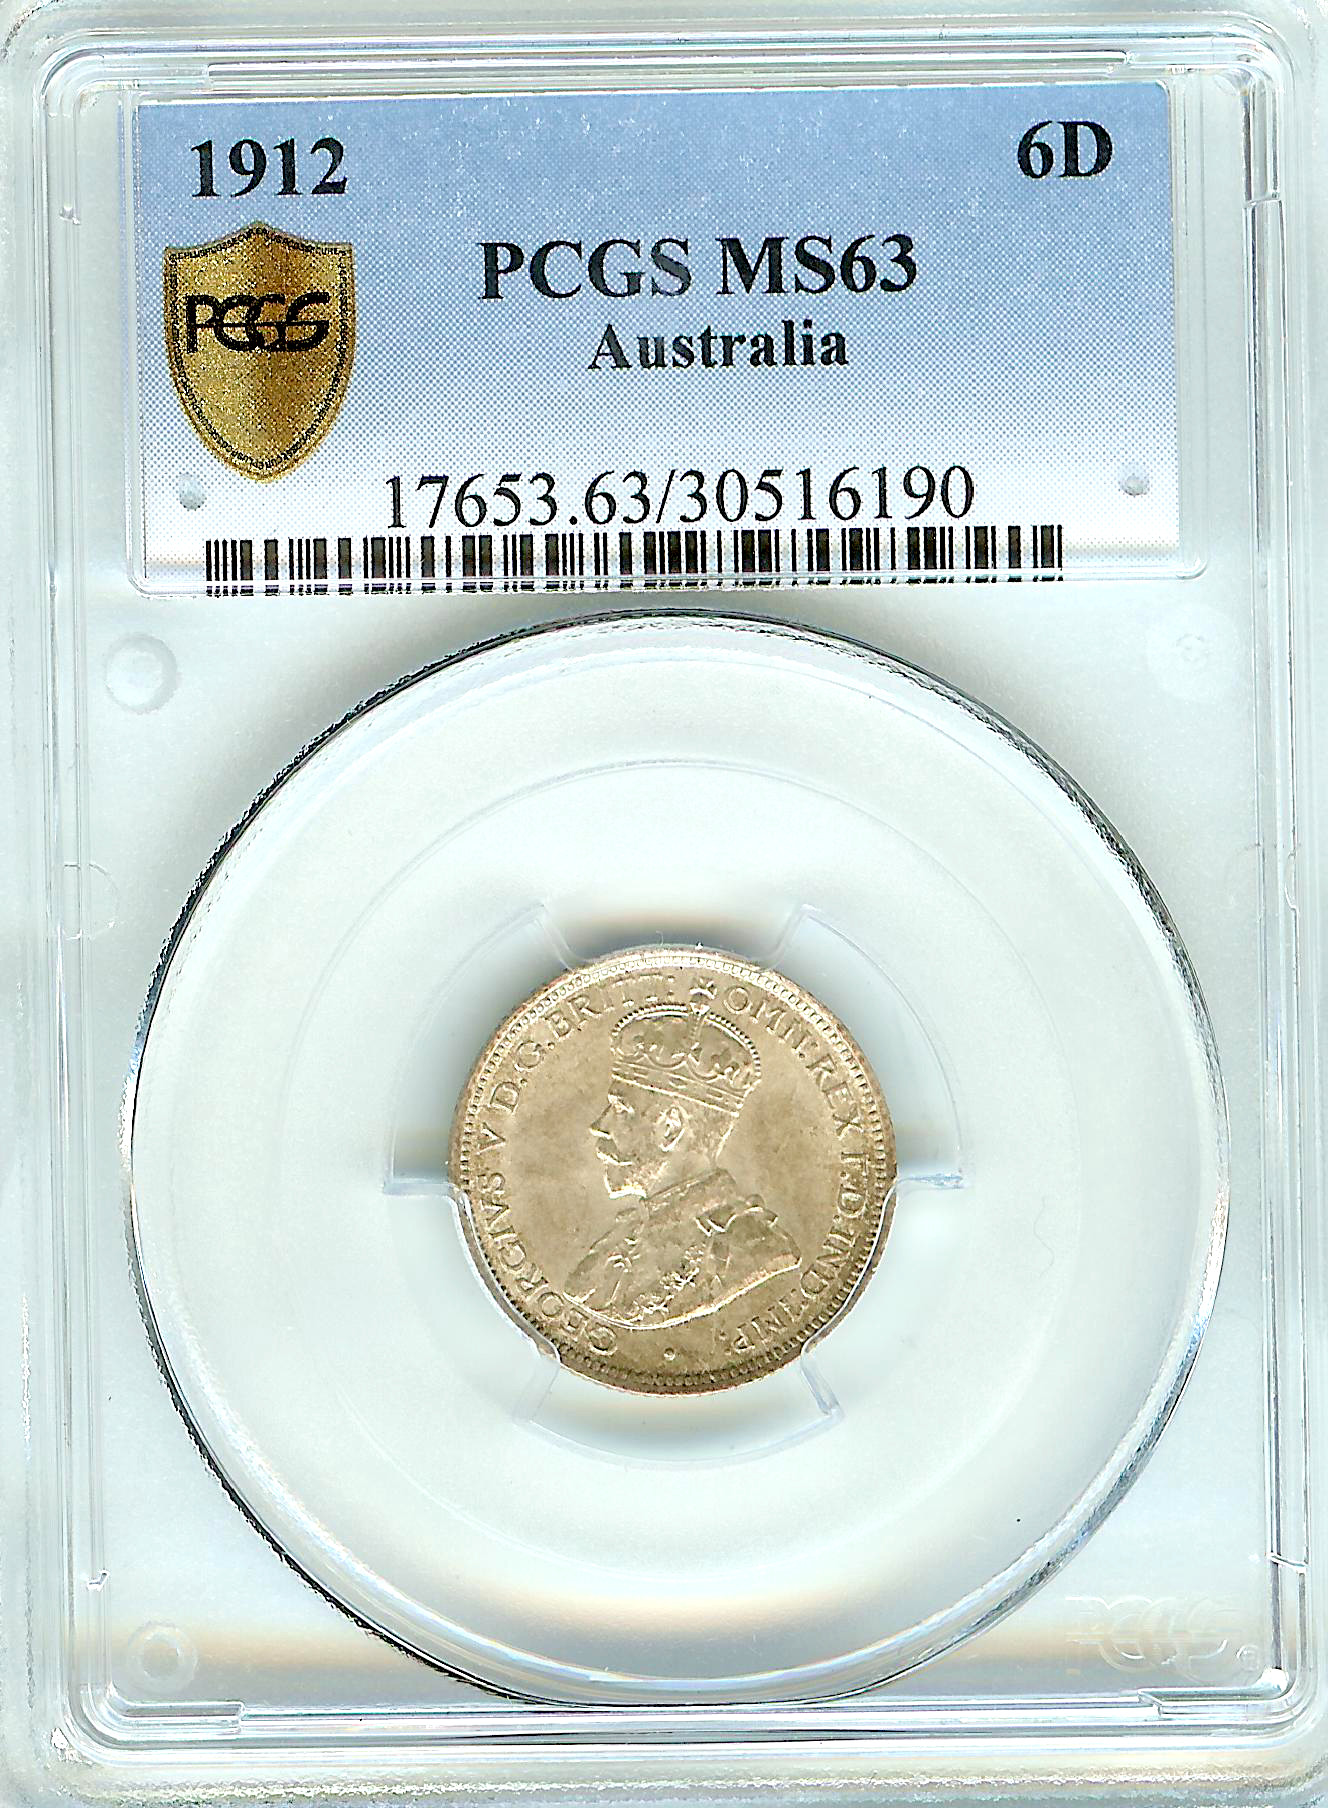 Australian 6 pence 1912 PCGS MS63